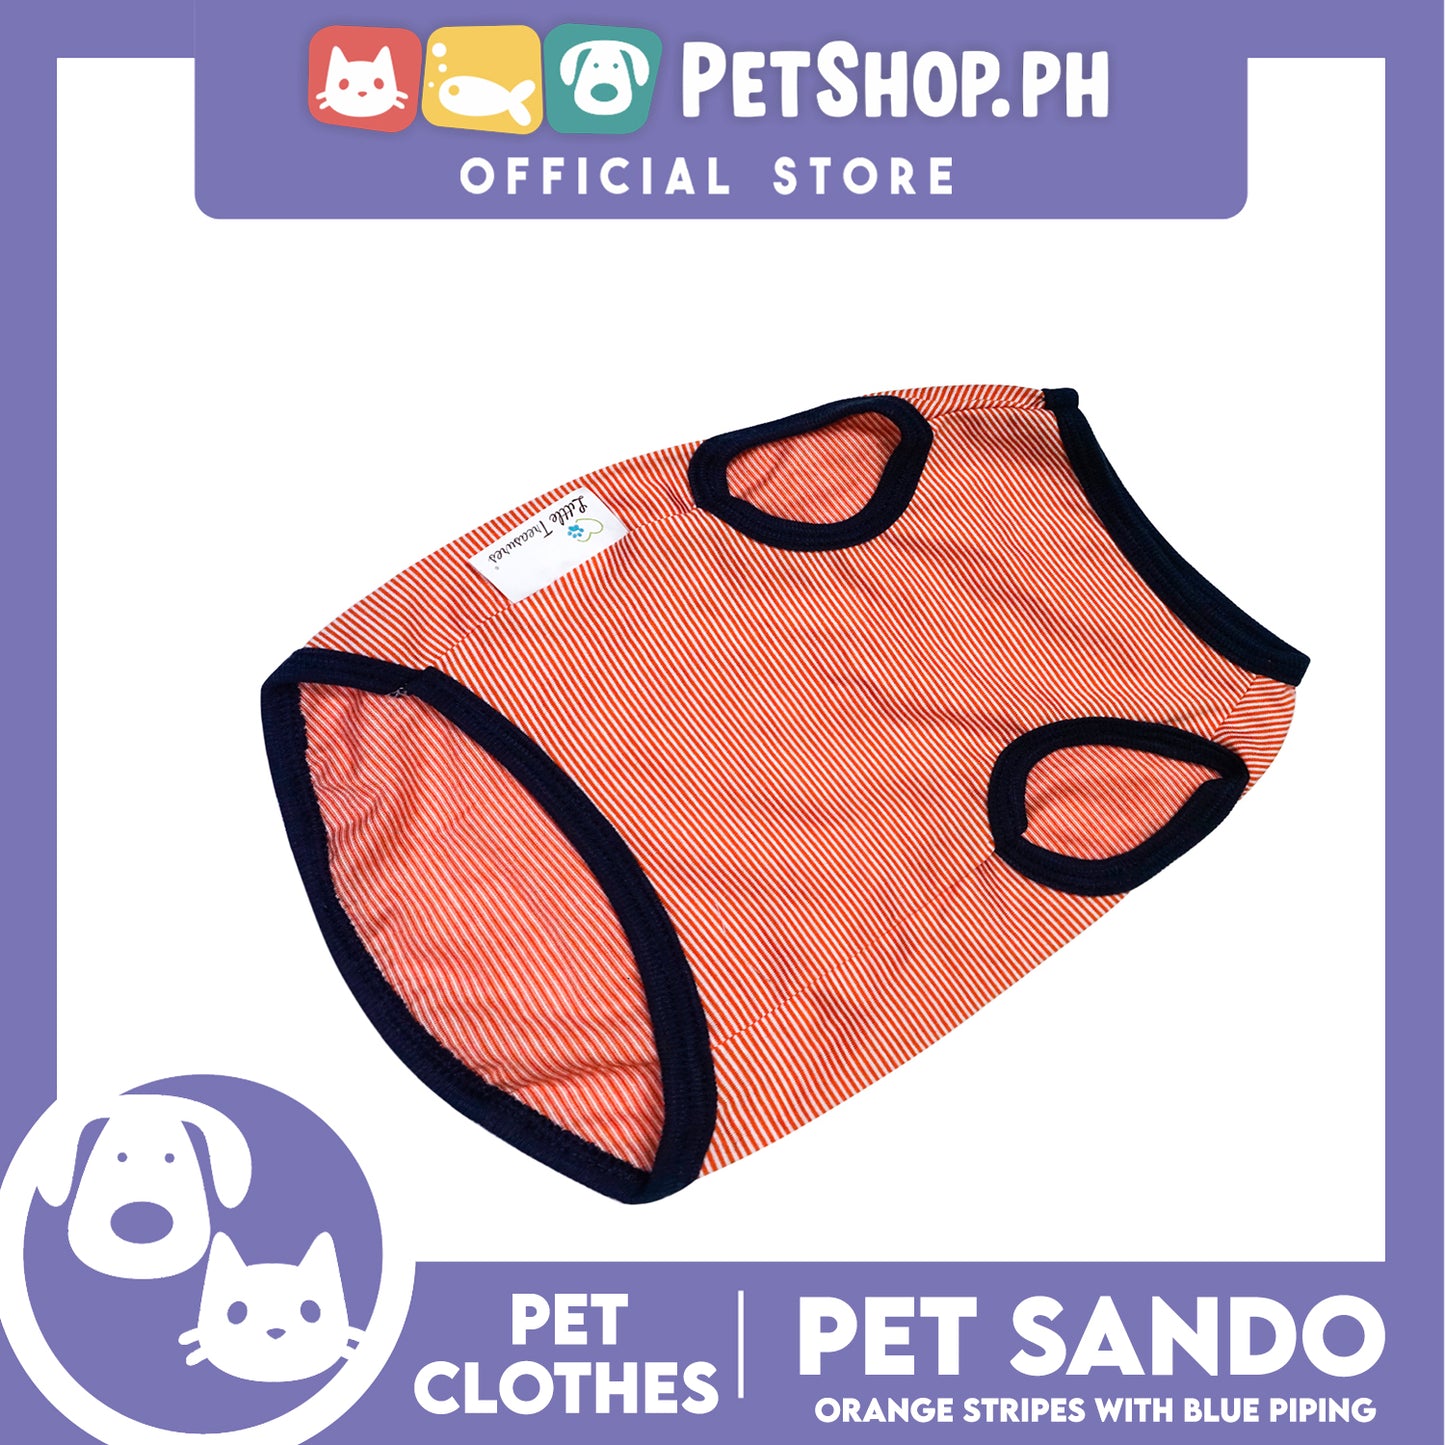 Pet Sando Orange Stripes with Blue Piping (Small) Pet Shirt Clothes Dress